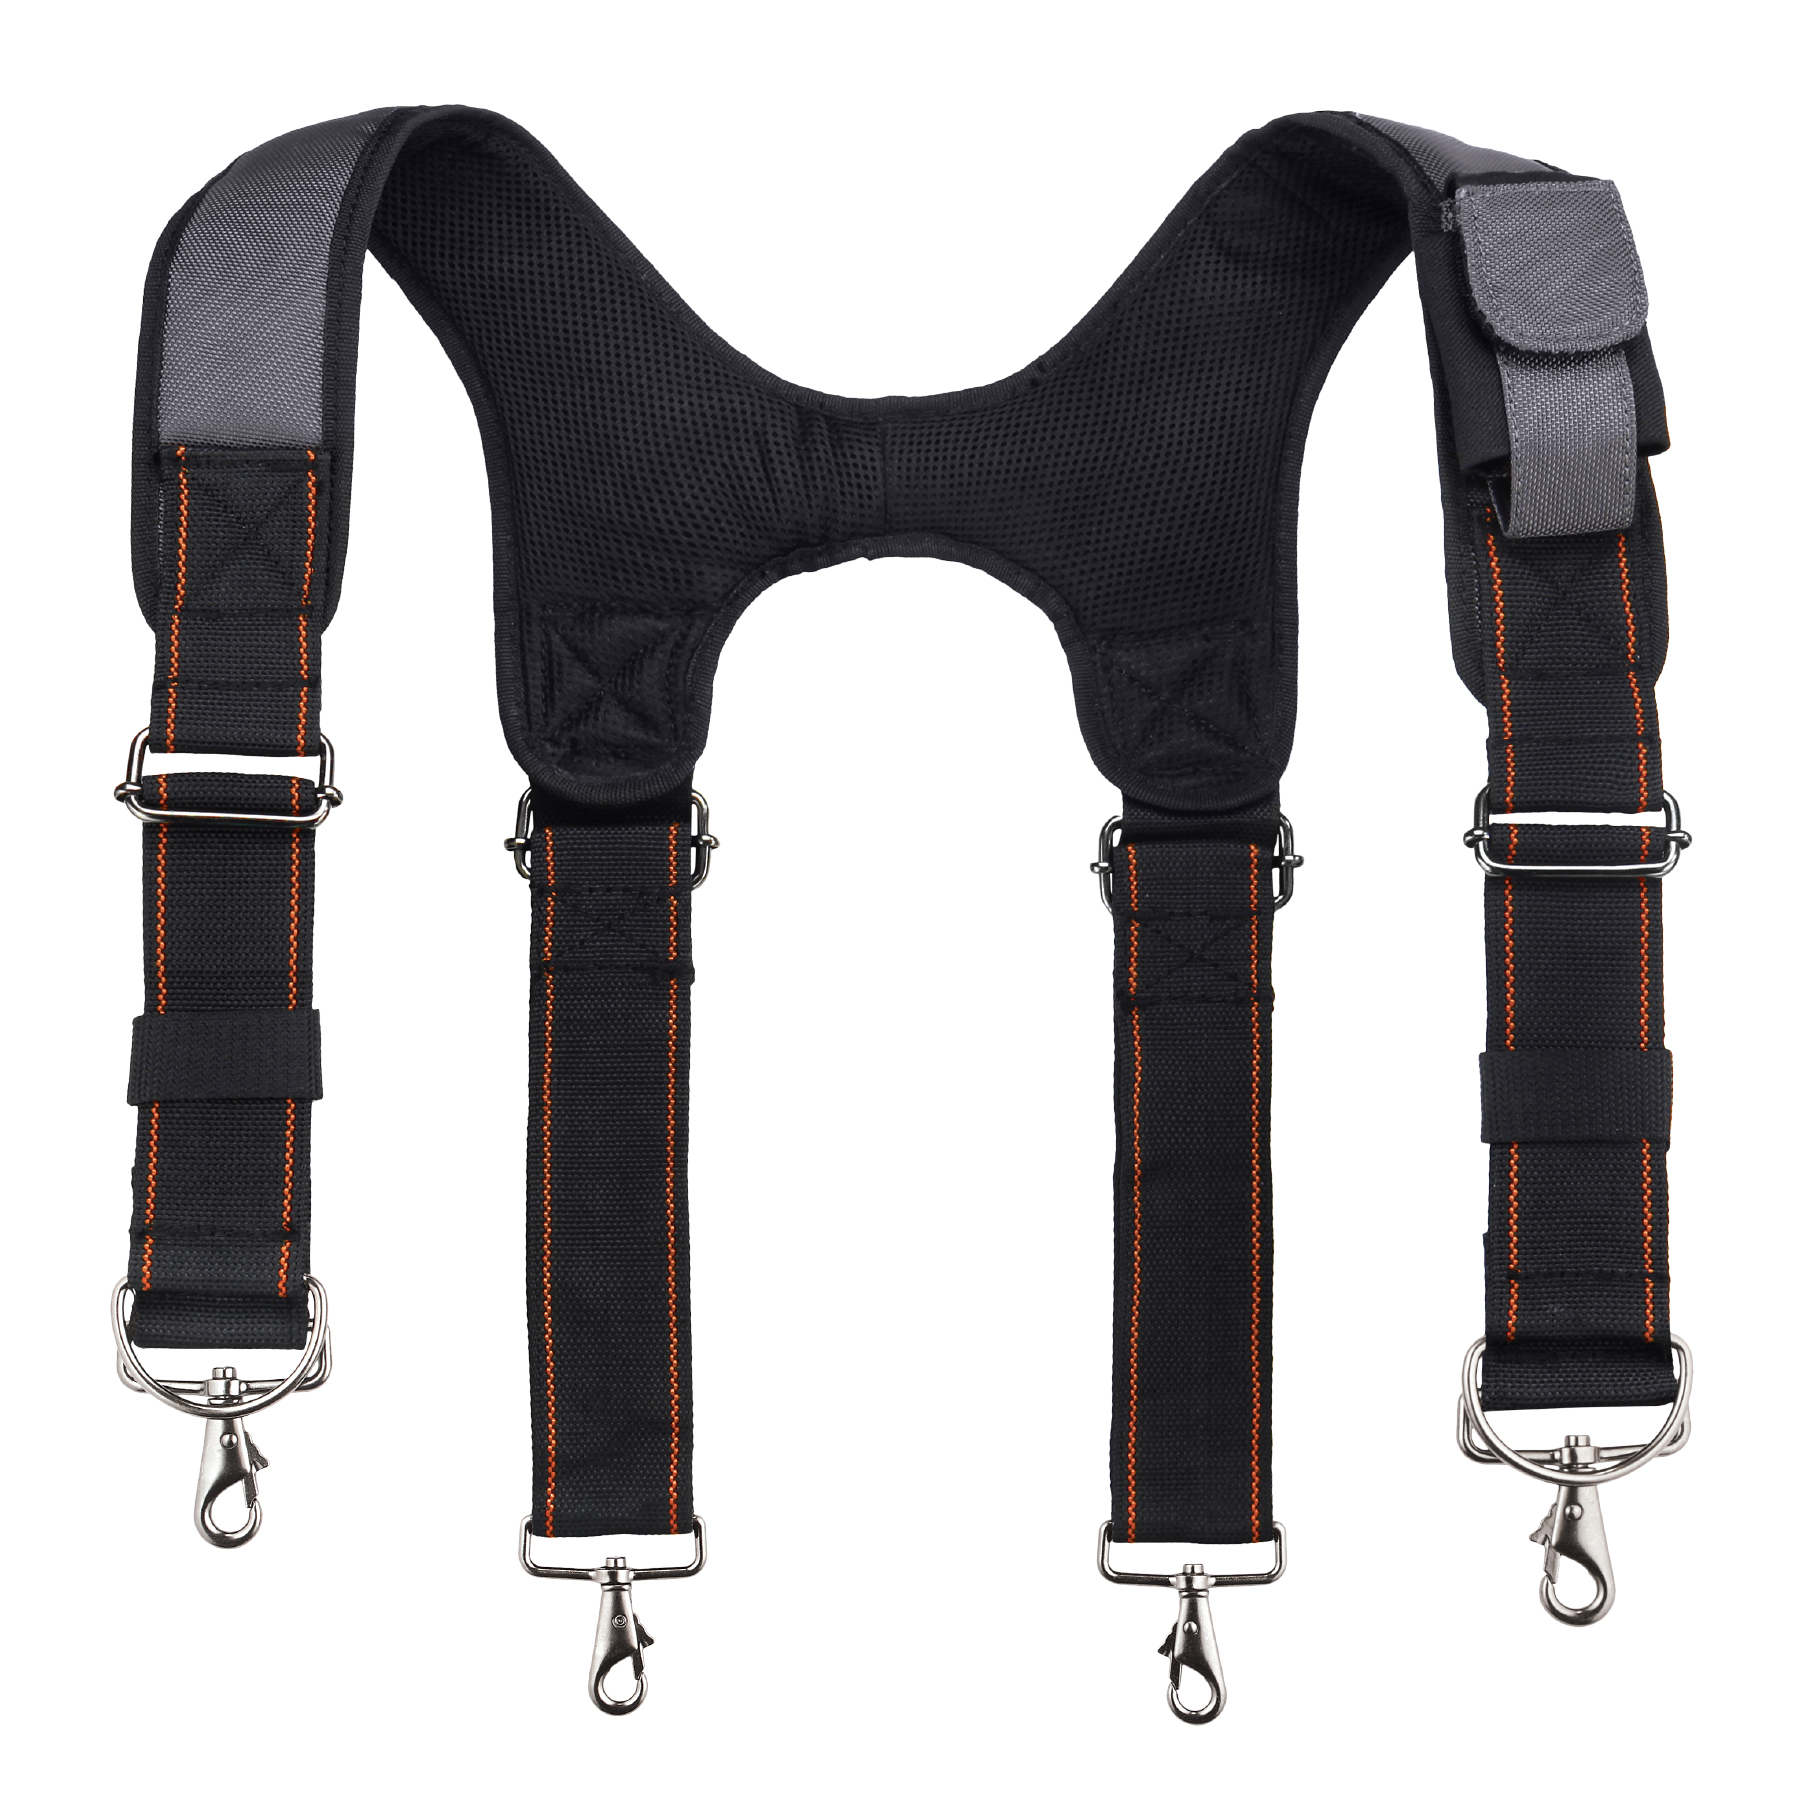 KAYA KL-611 Tool Belt Suspenders Shoulder Starp Adjustable Length Made in Korea